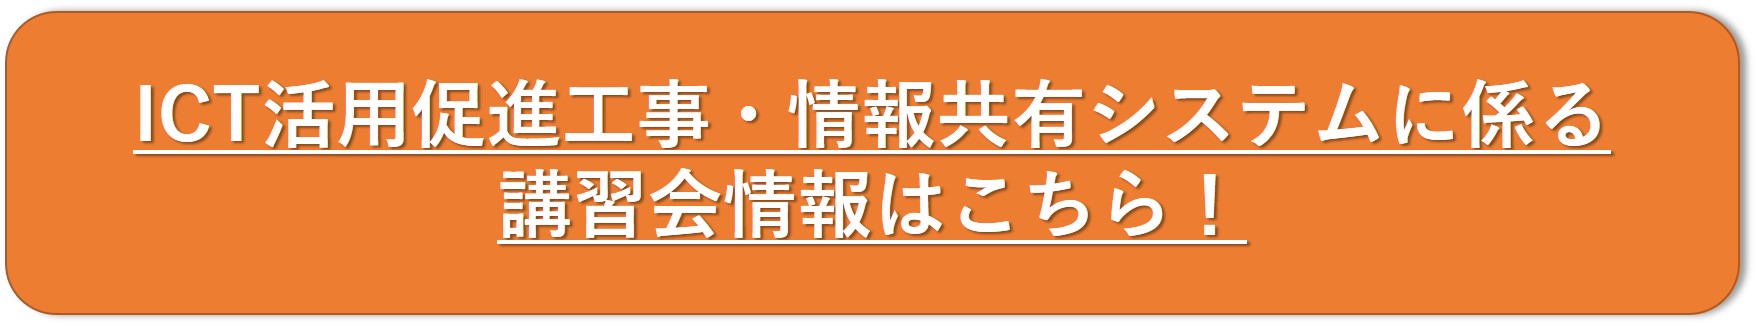 banner_koushuukai2